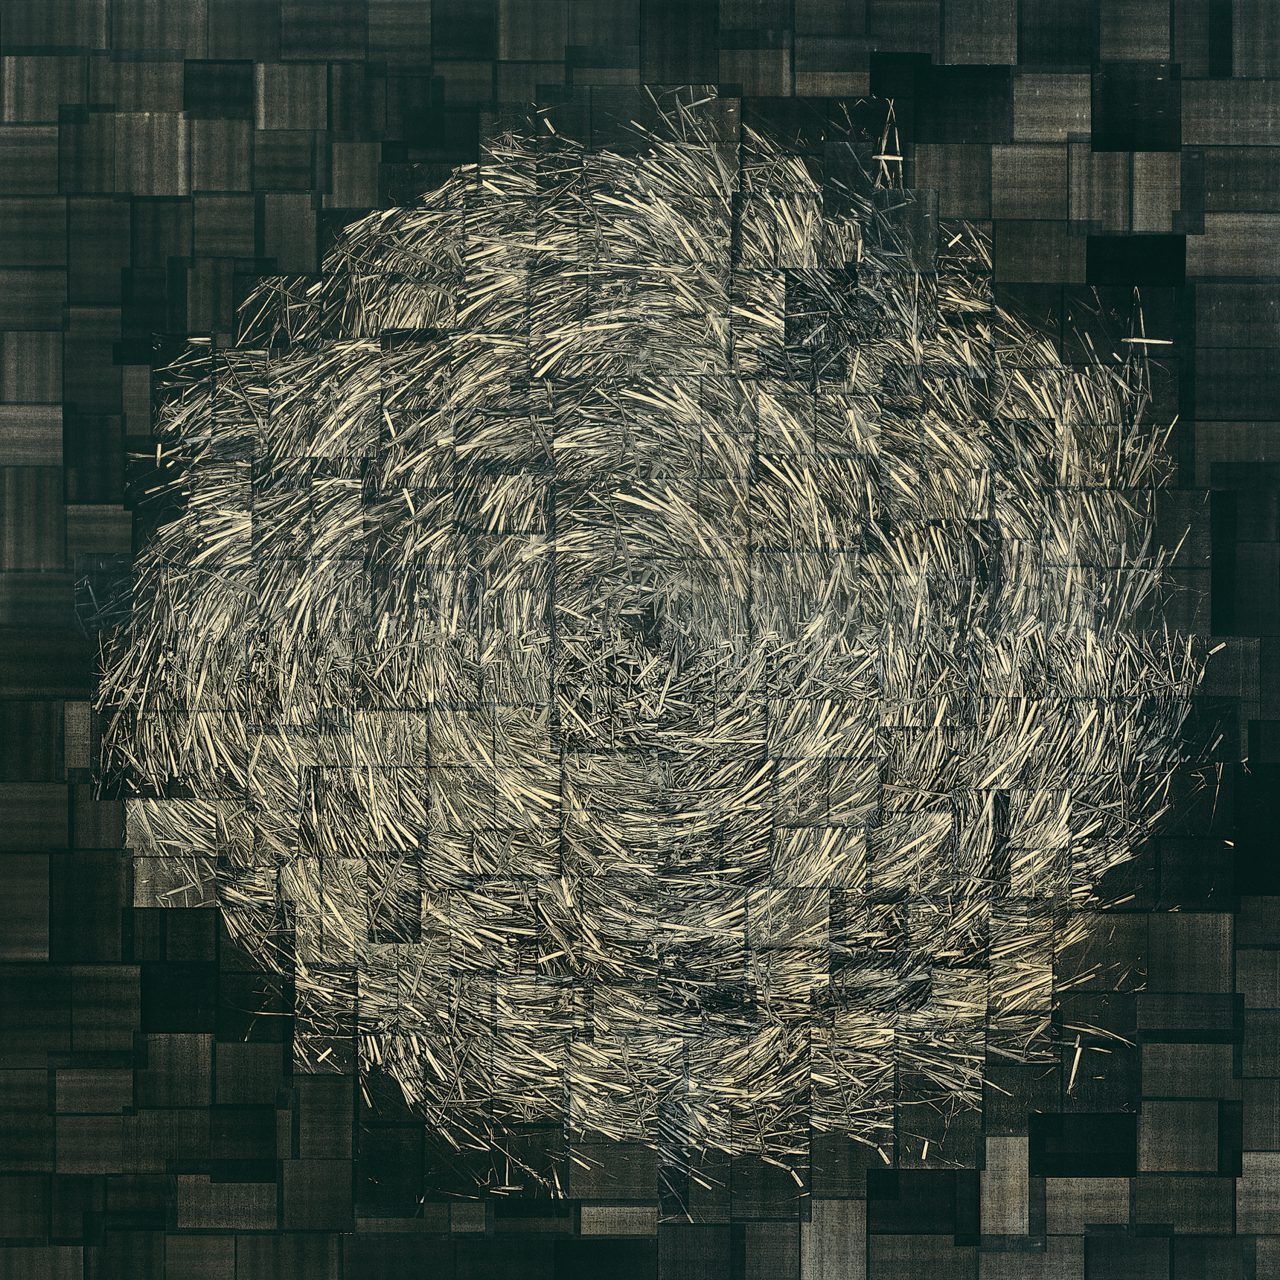 Bale of Straw, Copygraph on Woodbody, Ressin, 180x180cm, 2000/2001 (Foto: Wolfgang Detering)